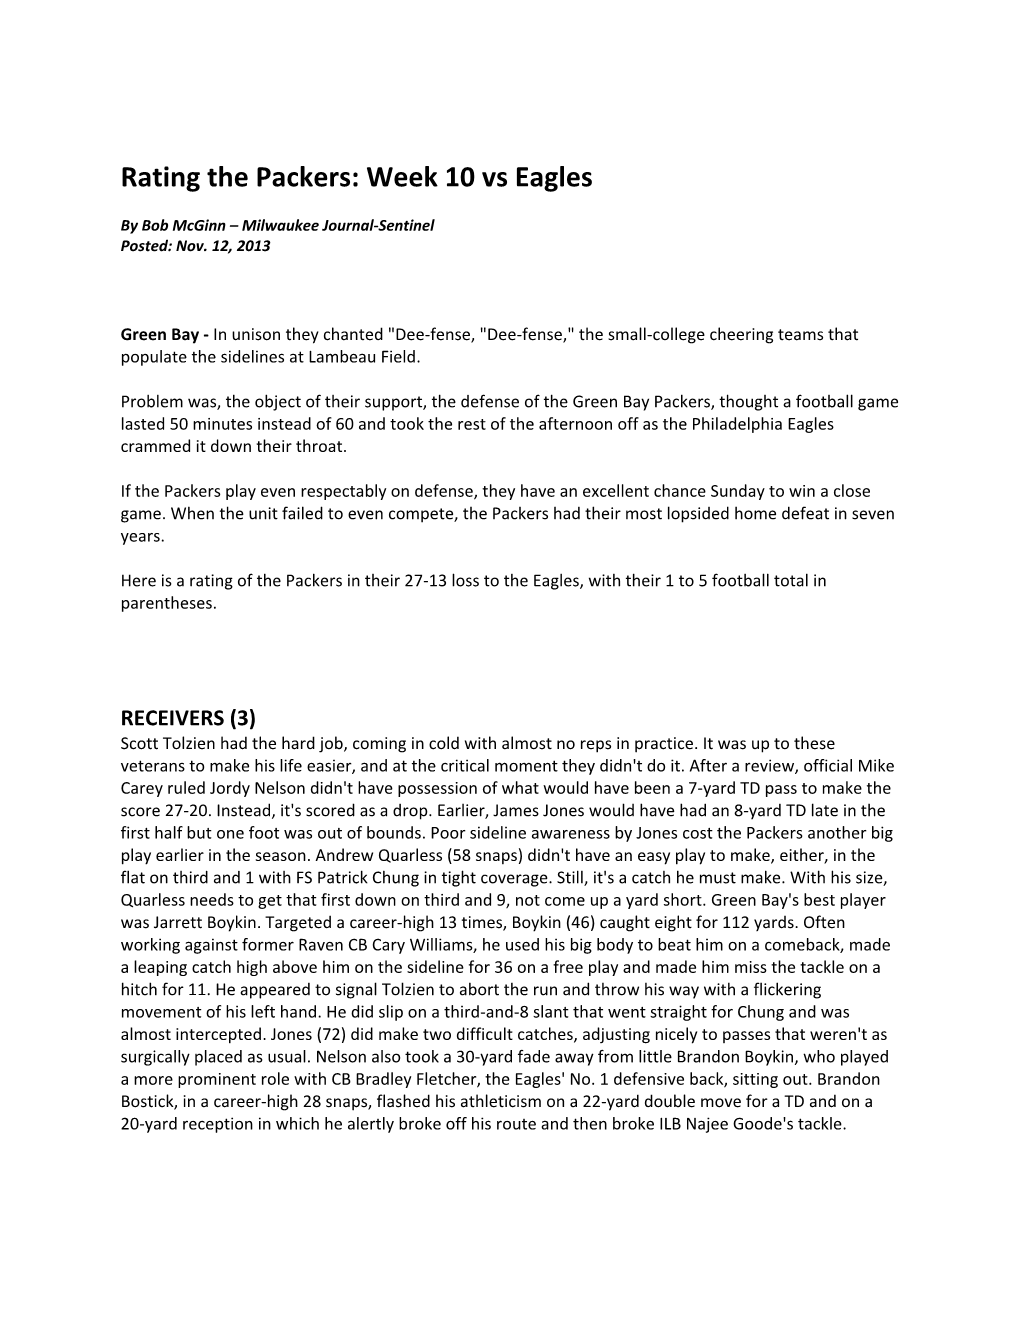 Rating the Packers: Week 10 Vs Eagles